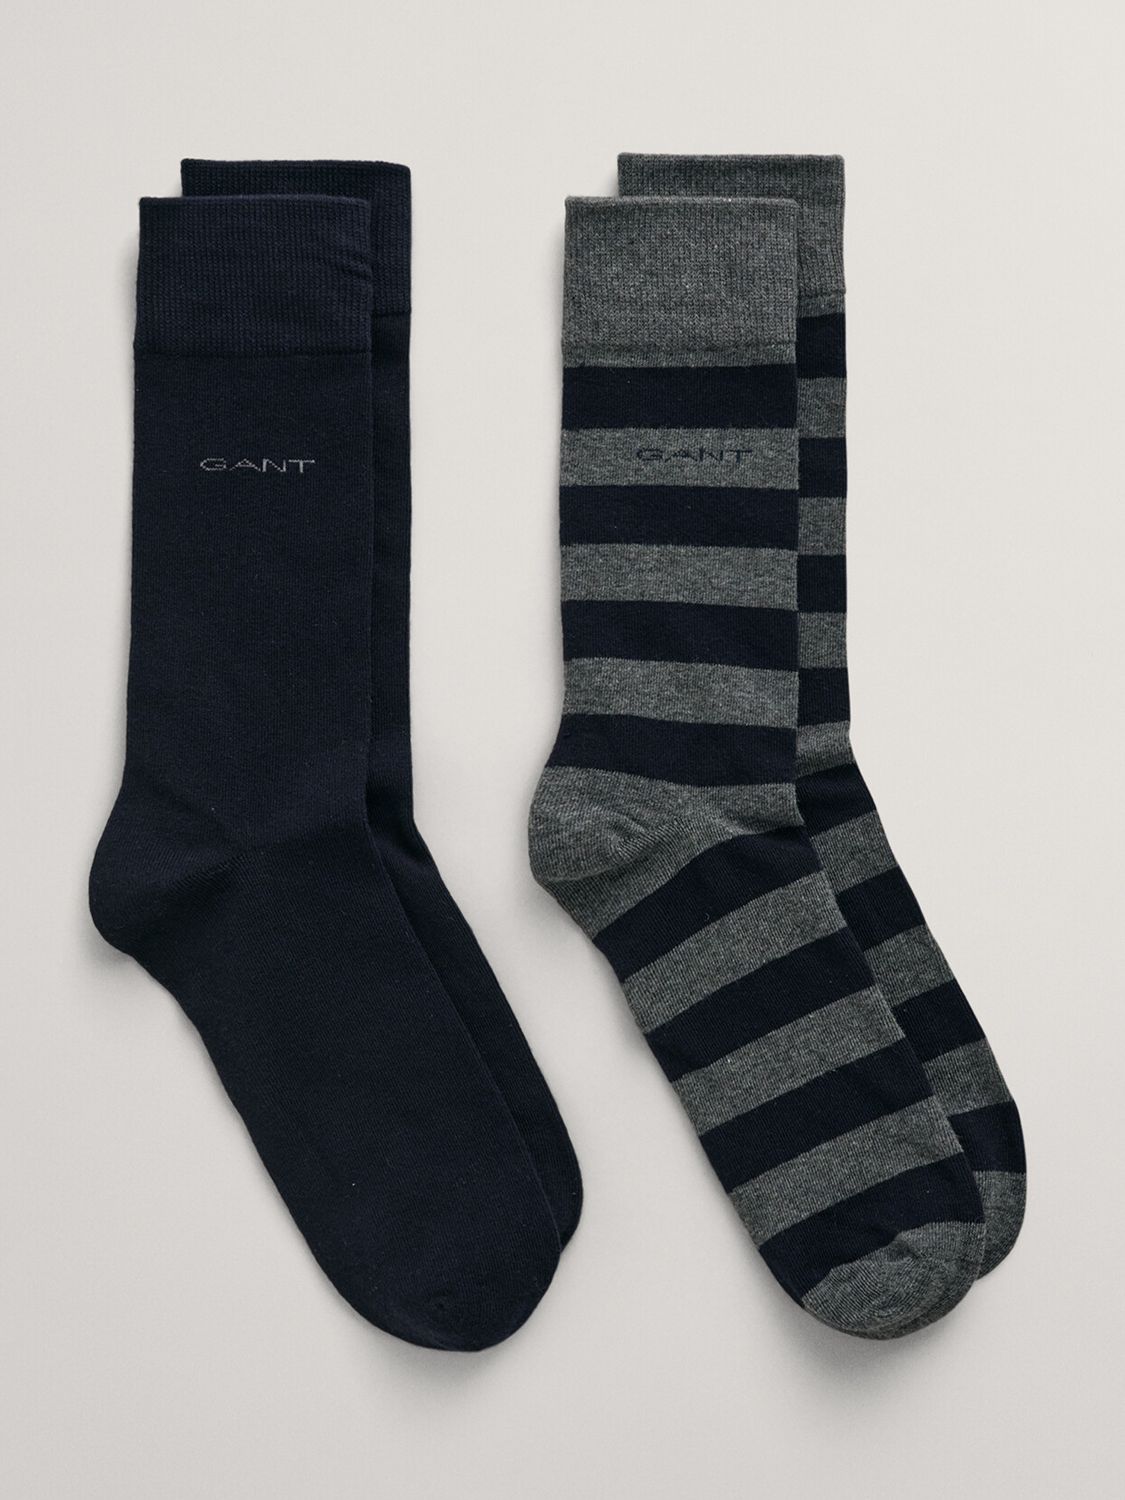 Buy GANT Plain and Stripe Ankle Socks, Pack of 2 Online at johnlewis.com